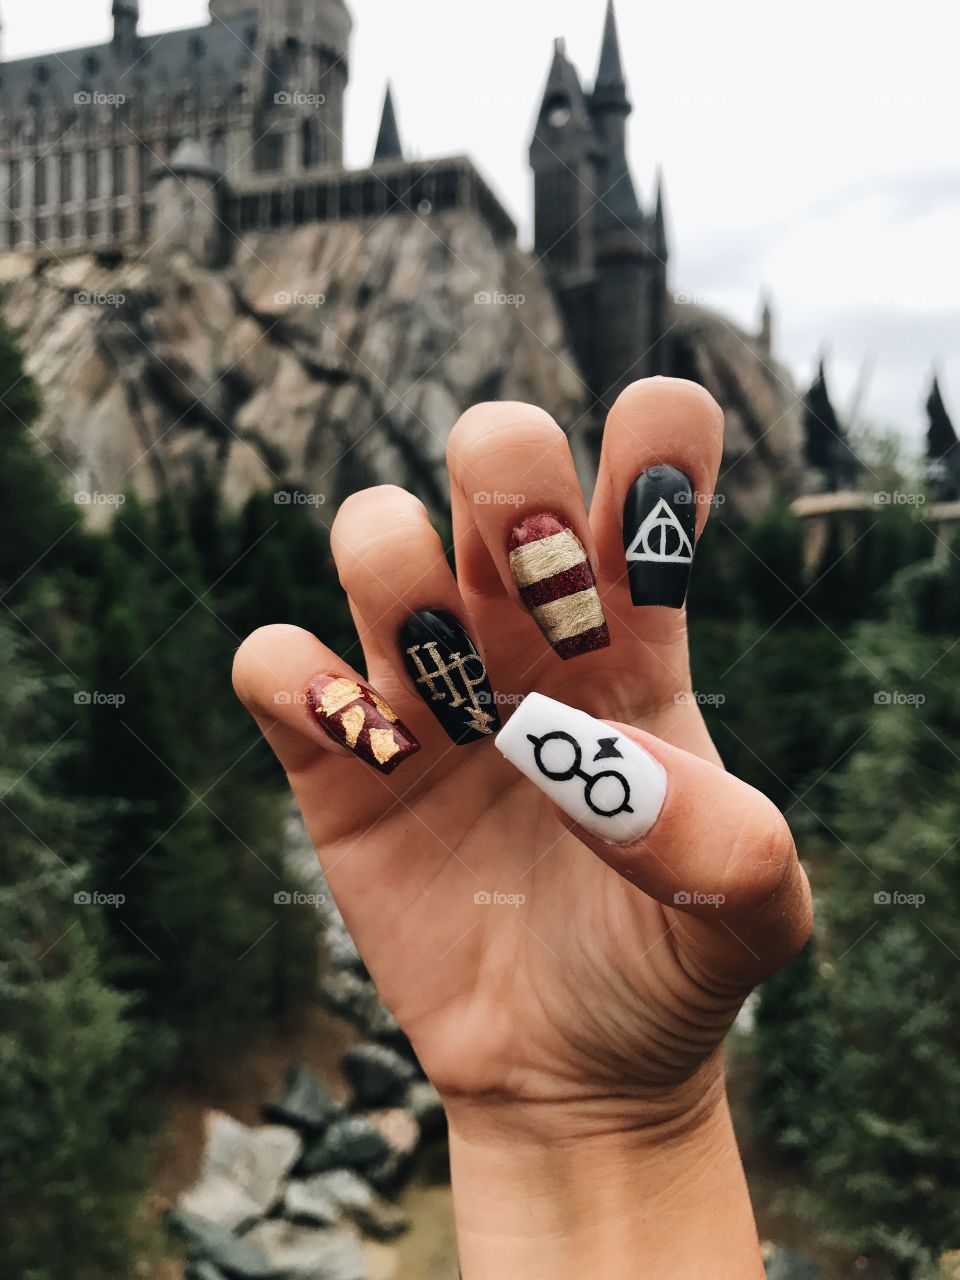 Harry Potter nails at Harry Potter world !